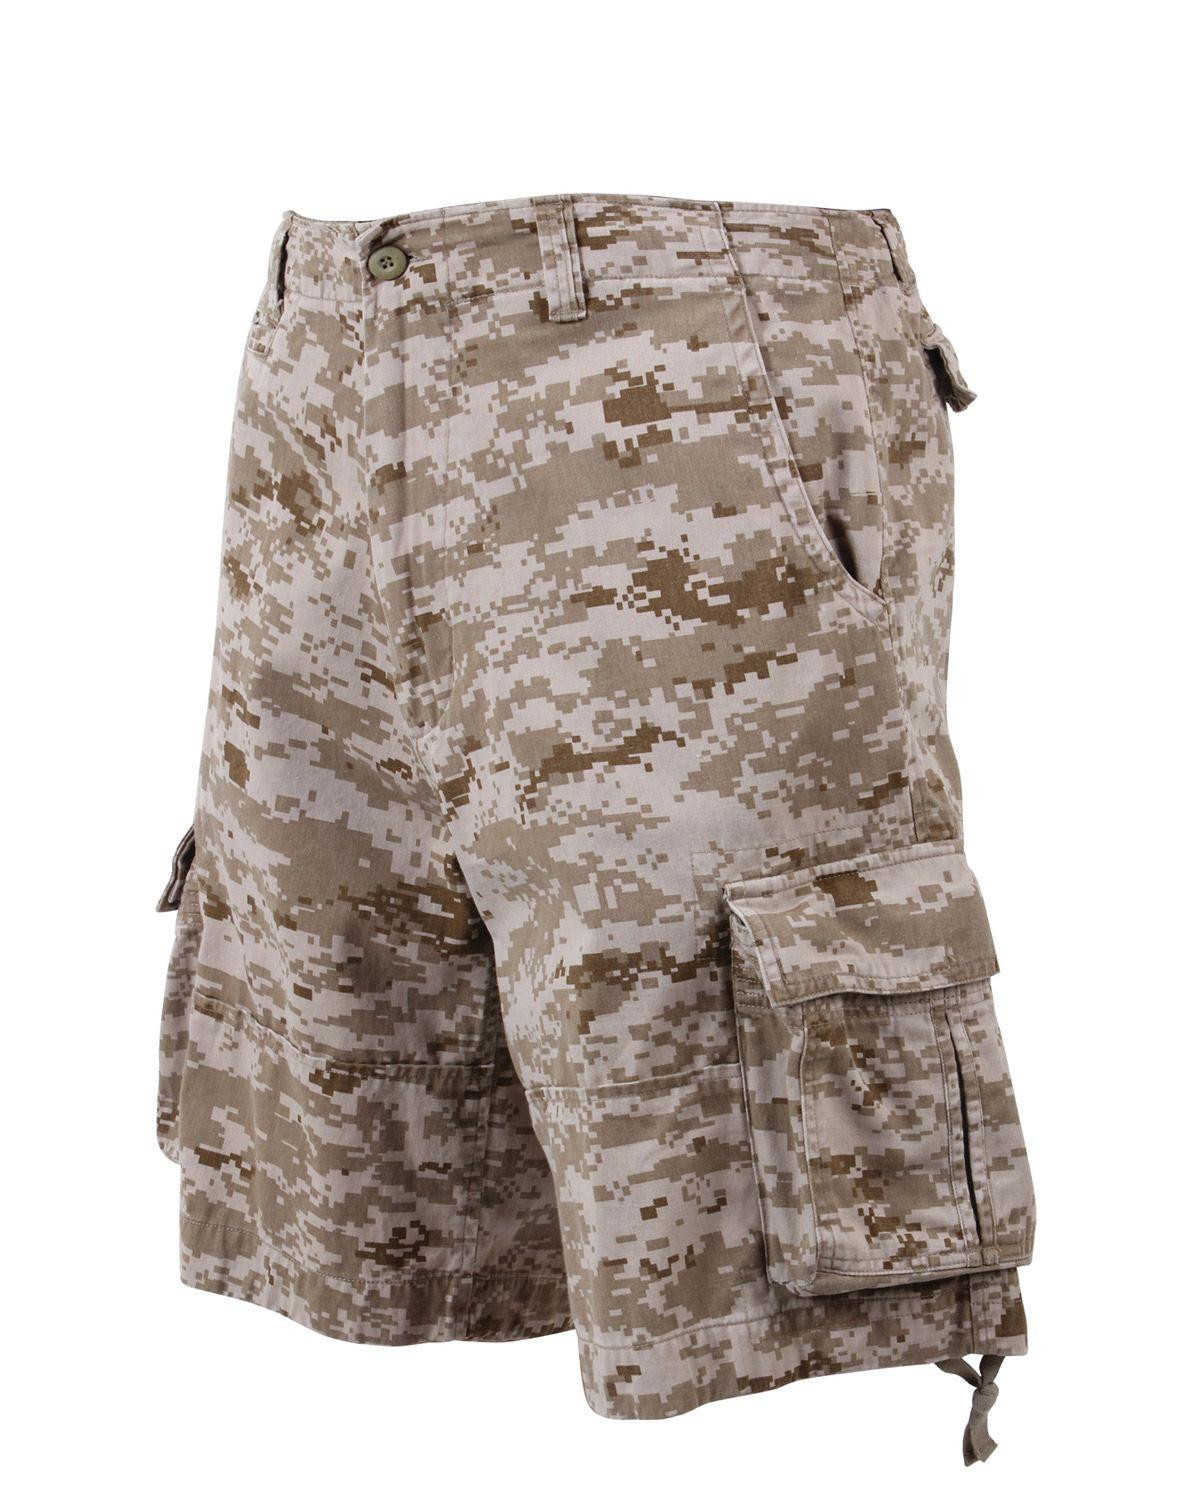 Rothco Vintage Infantry Shorts (Desert Digital Camo, S)